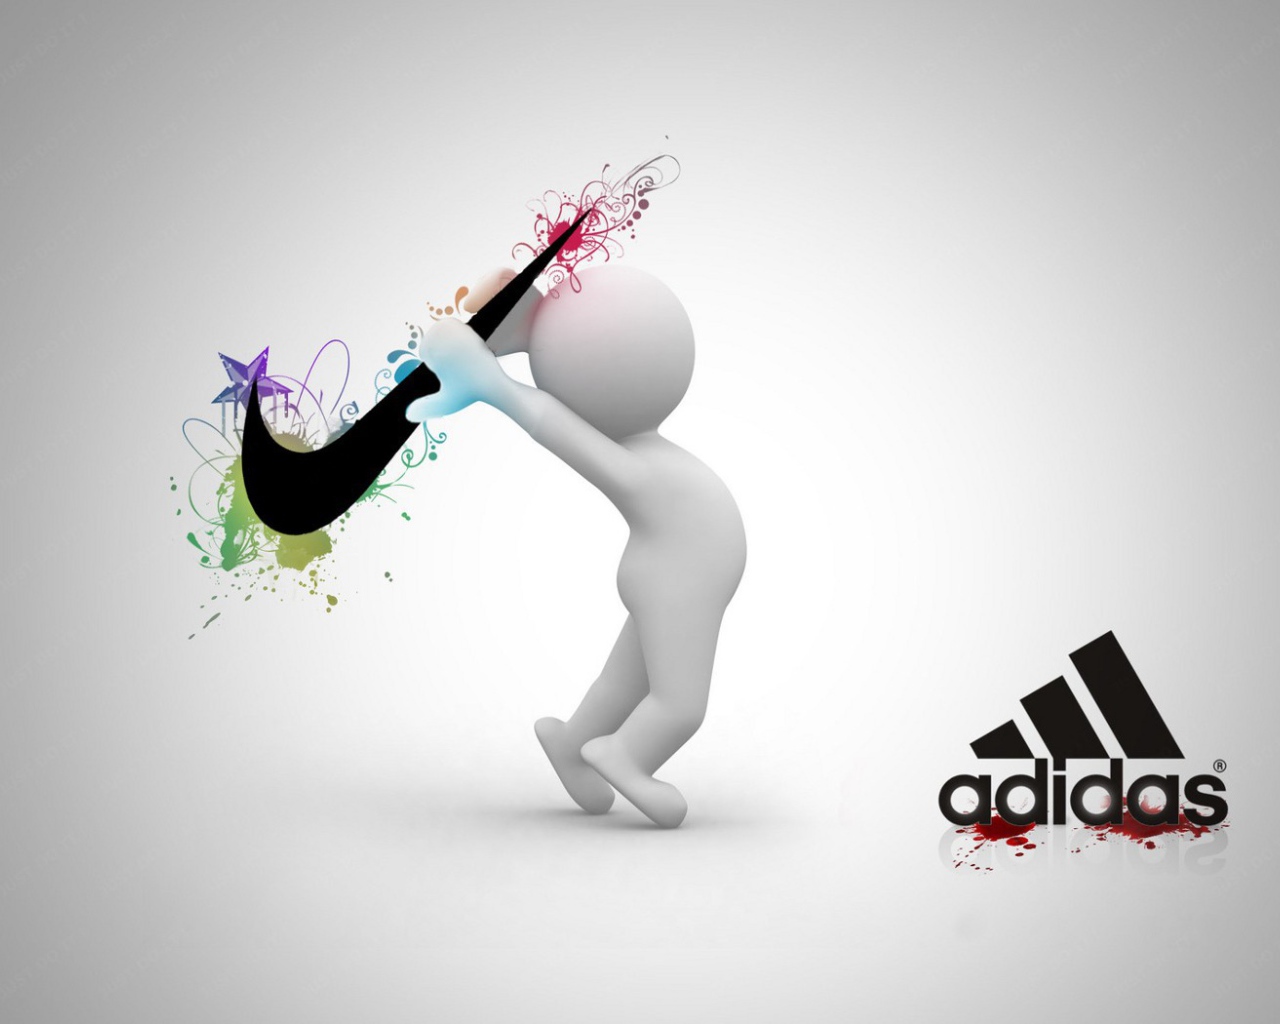 Nike конкурент Adidas